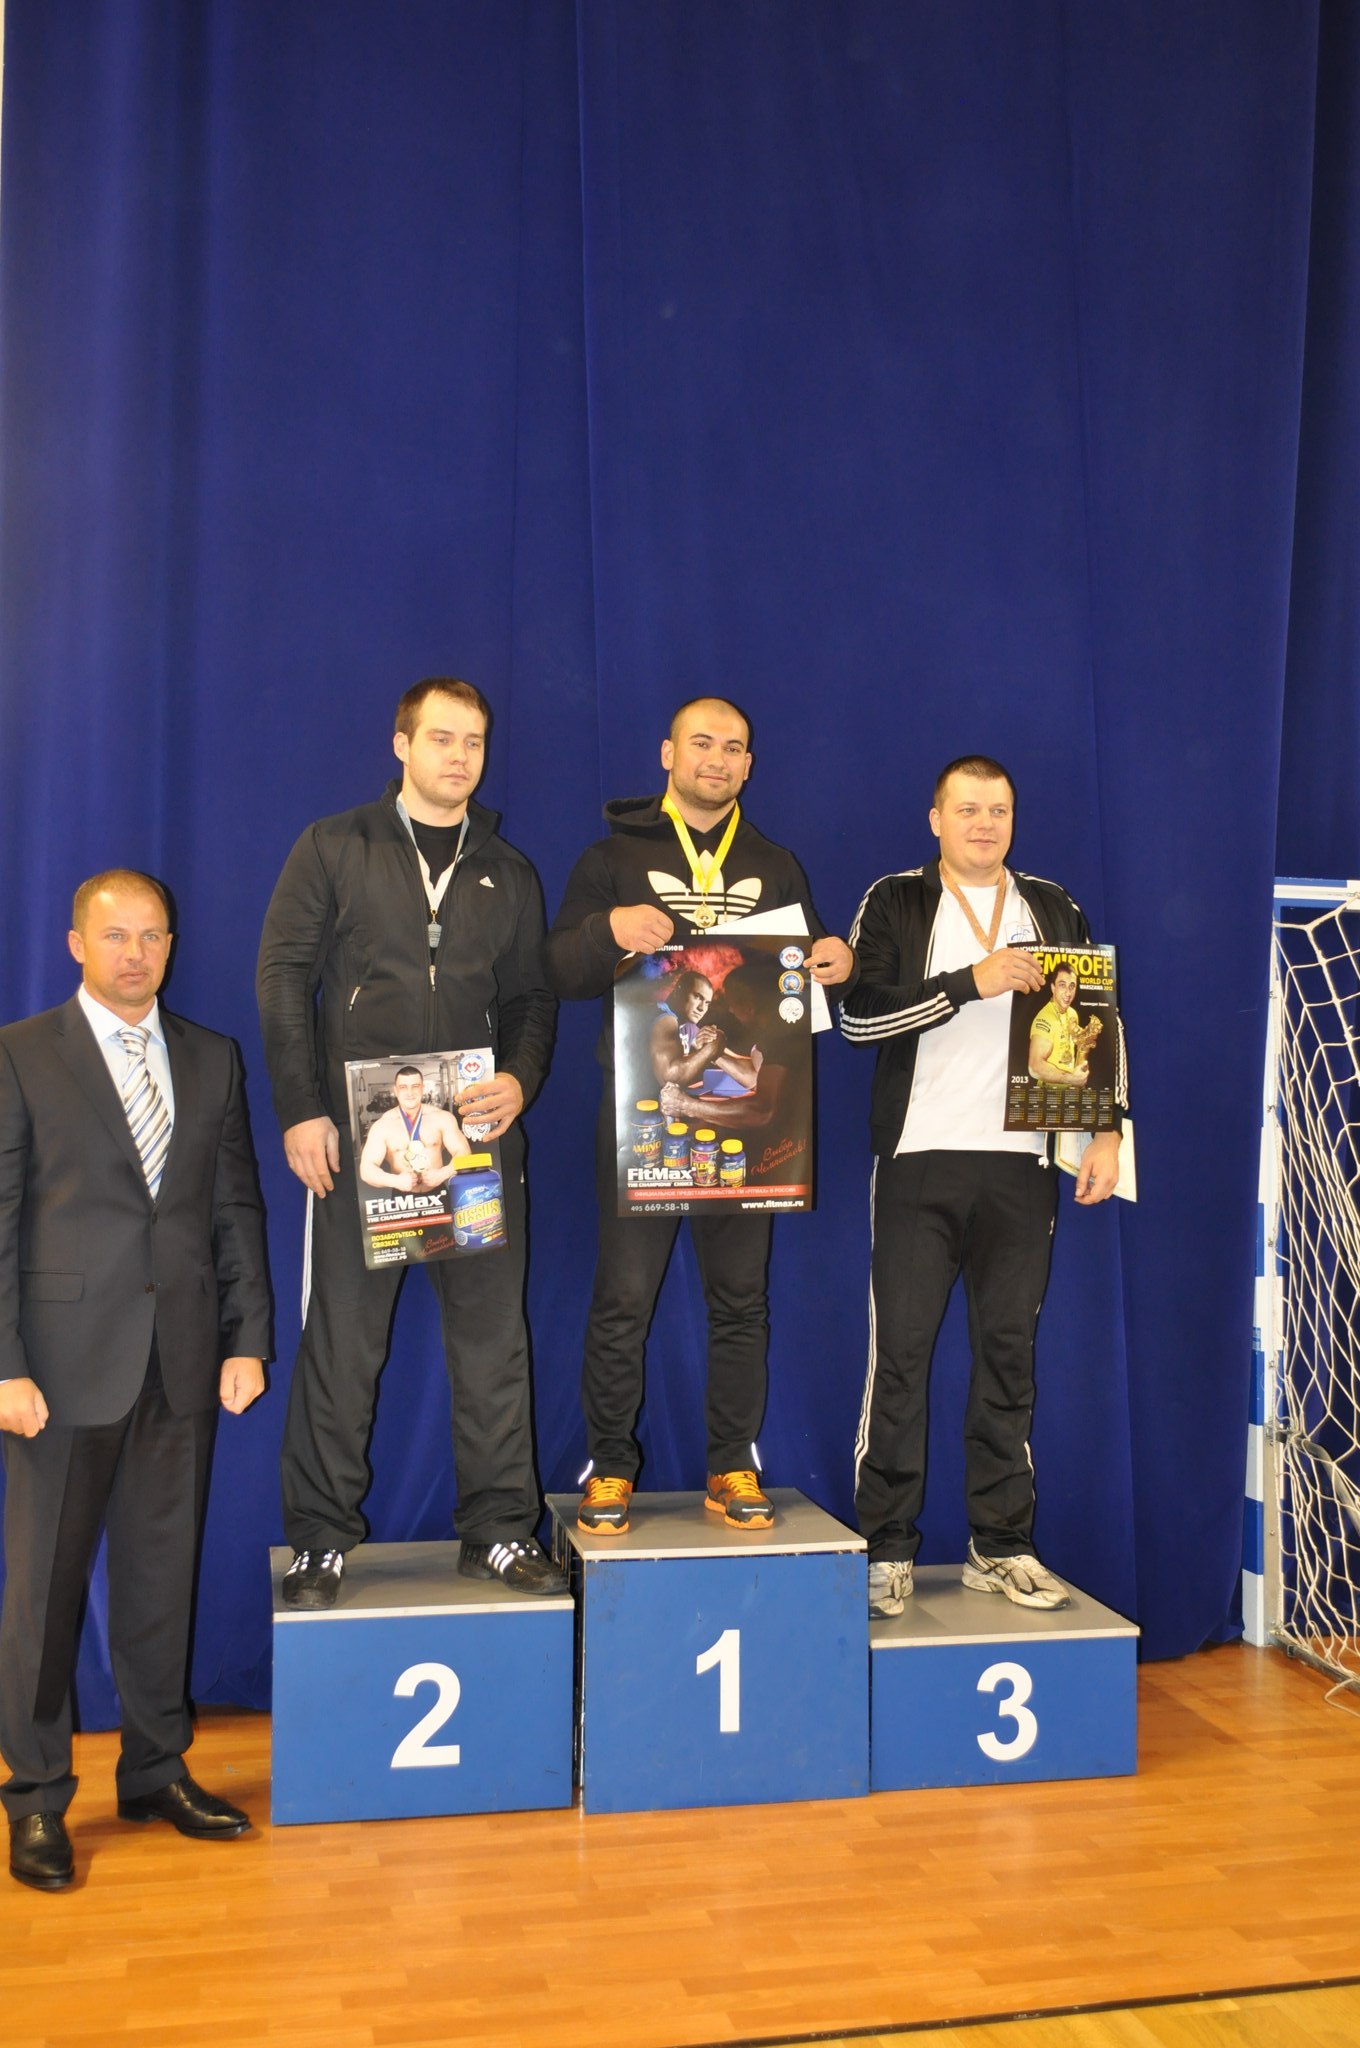 SENIOR MEN 110 KG - RIGHT HAND PODIUM: Ivan Matyushenko (2) - Arsen Liliev (1) - Anton Minaev (3)│ Moscow Armwrestling Championship 2012 │14 – 15 December 2012